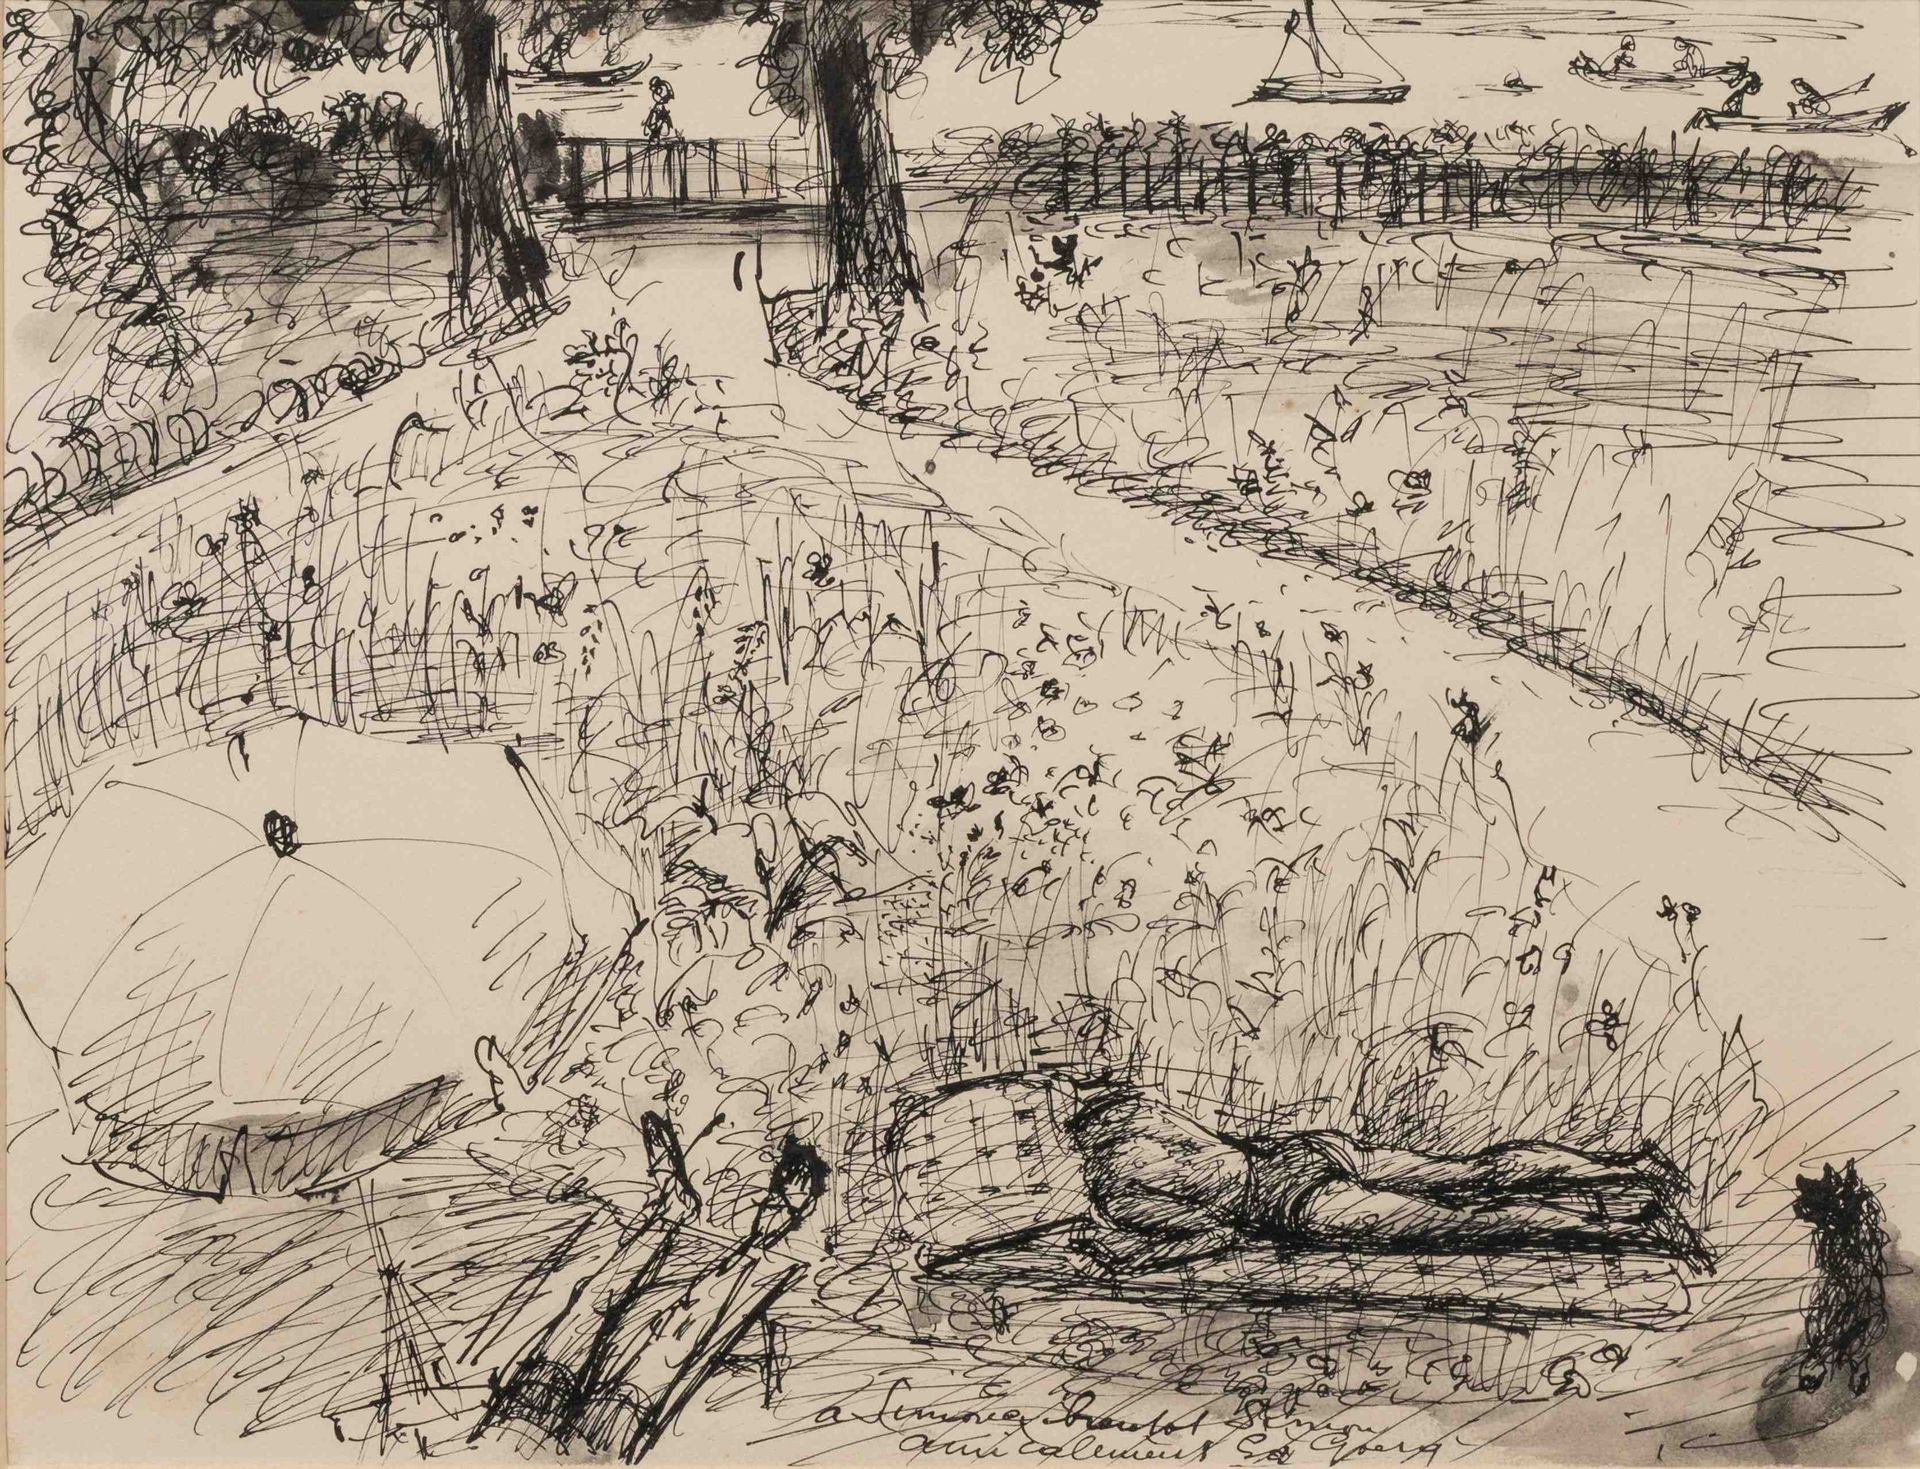 Null 爱德华-戈尔（Edouard GOERG）（悉尼，1893年-卡利安，1969年）。

在海边享受日光浴。

右下角有水墨签名，并献给西蒙（Simon&hellip;